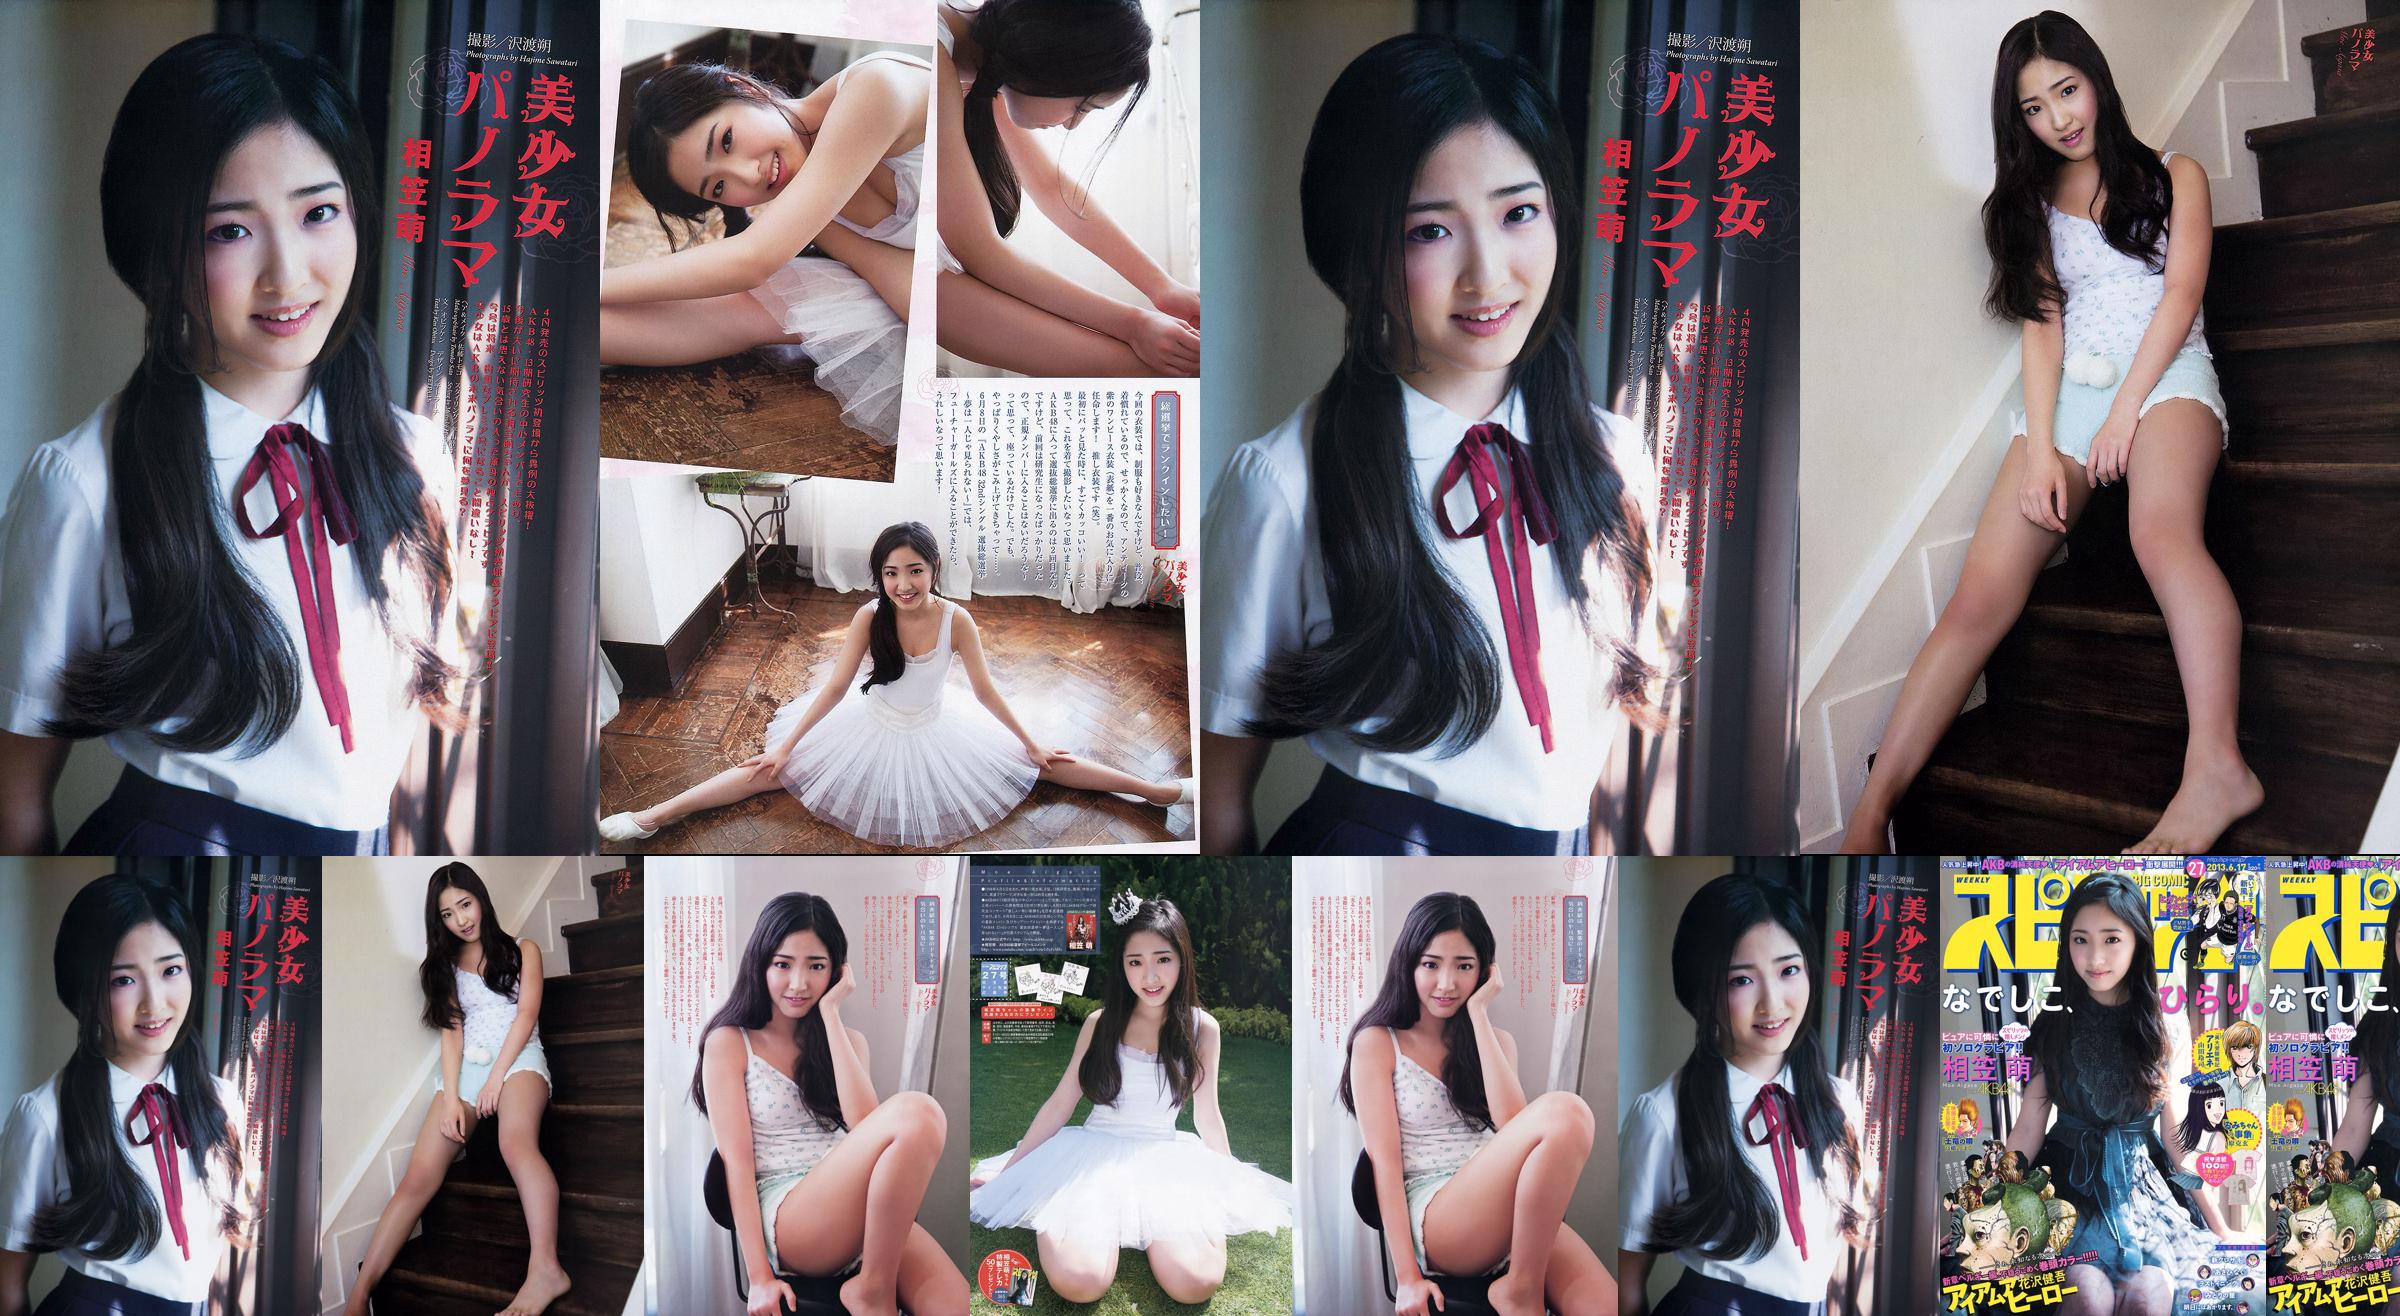 [Grands esprits de la bande dessinée hebdomadaire] Aikasa Moe 2013 n ° 27 Magazine photo No.96c2d5 Page 1